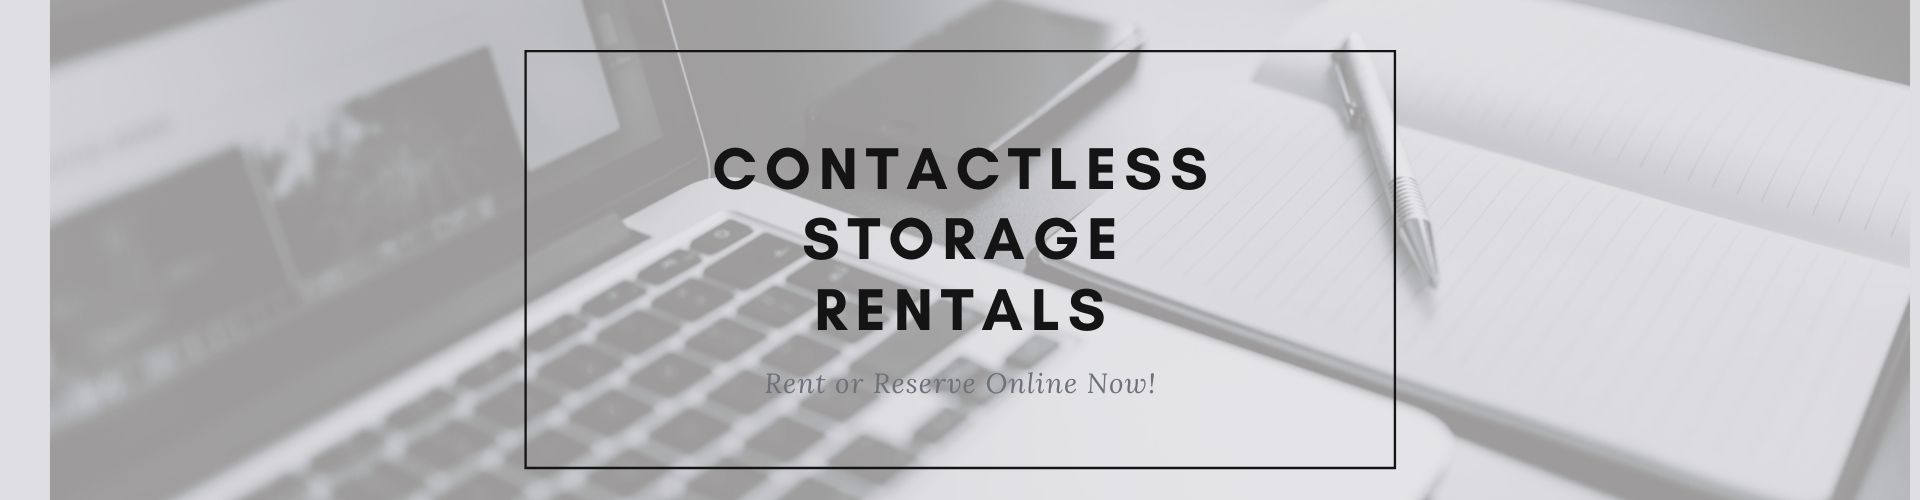 contactless storage rentals in Dallas TX